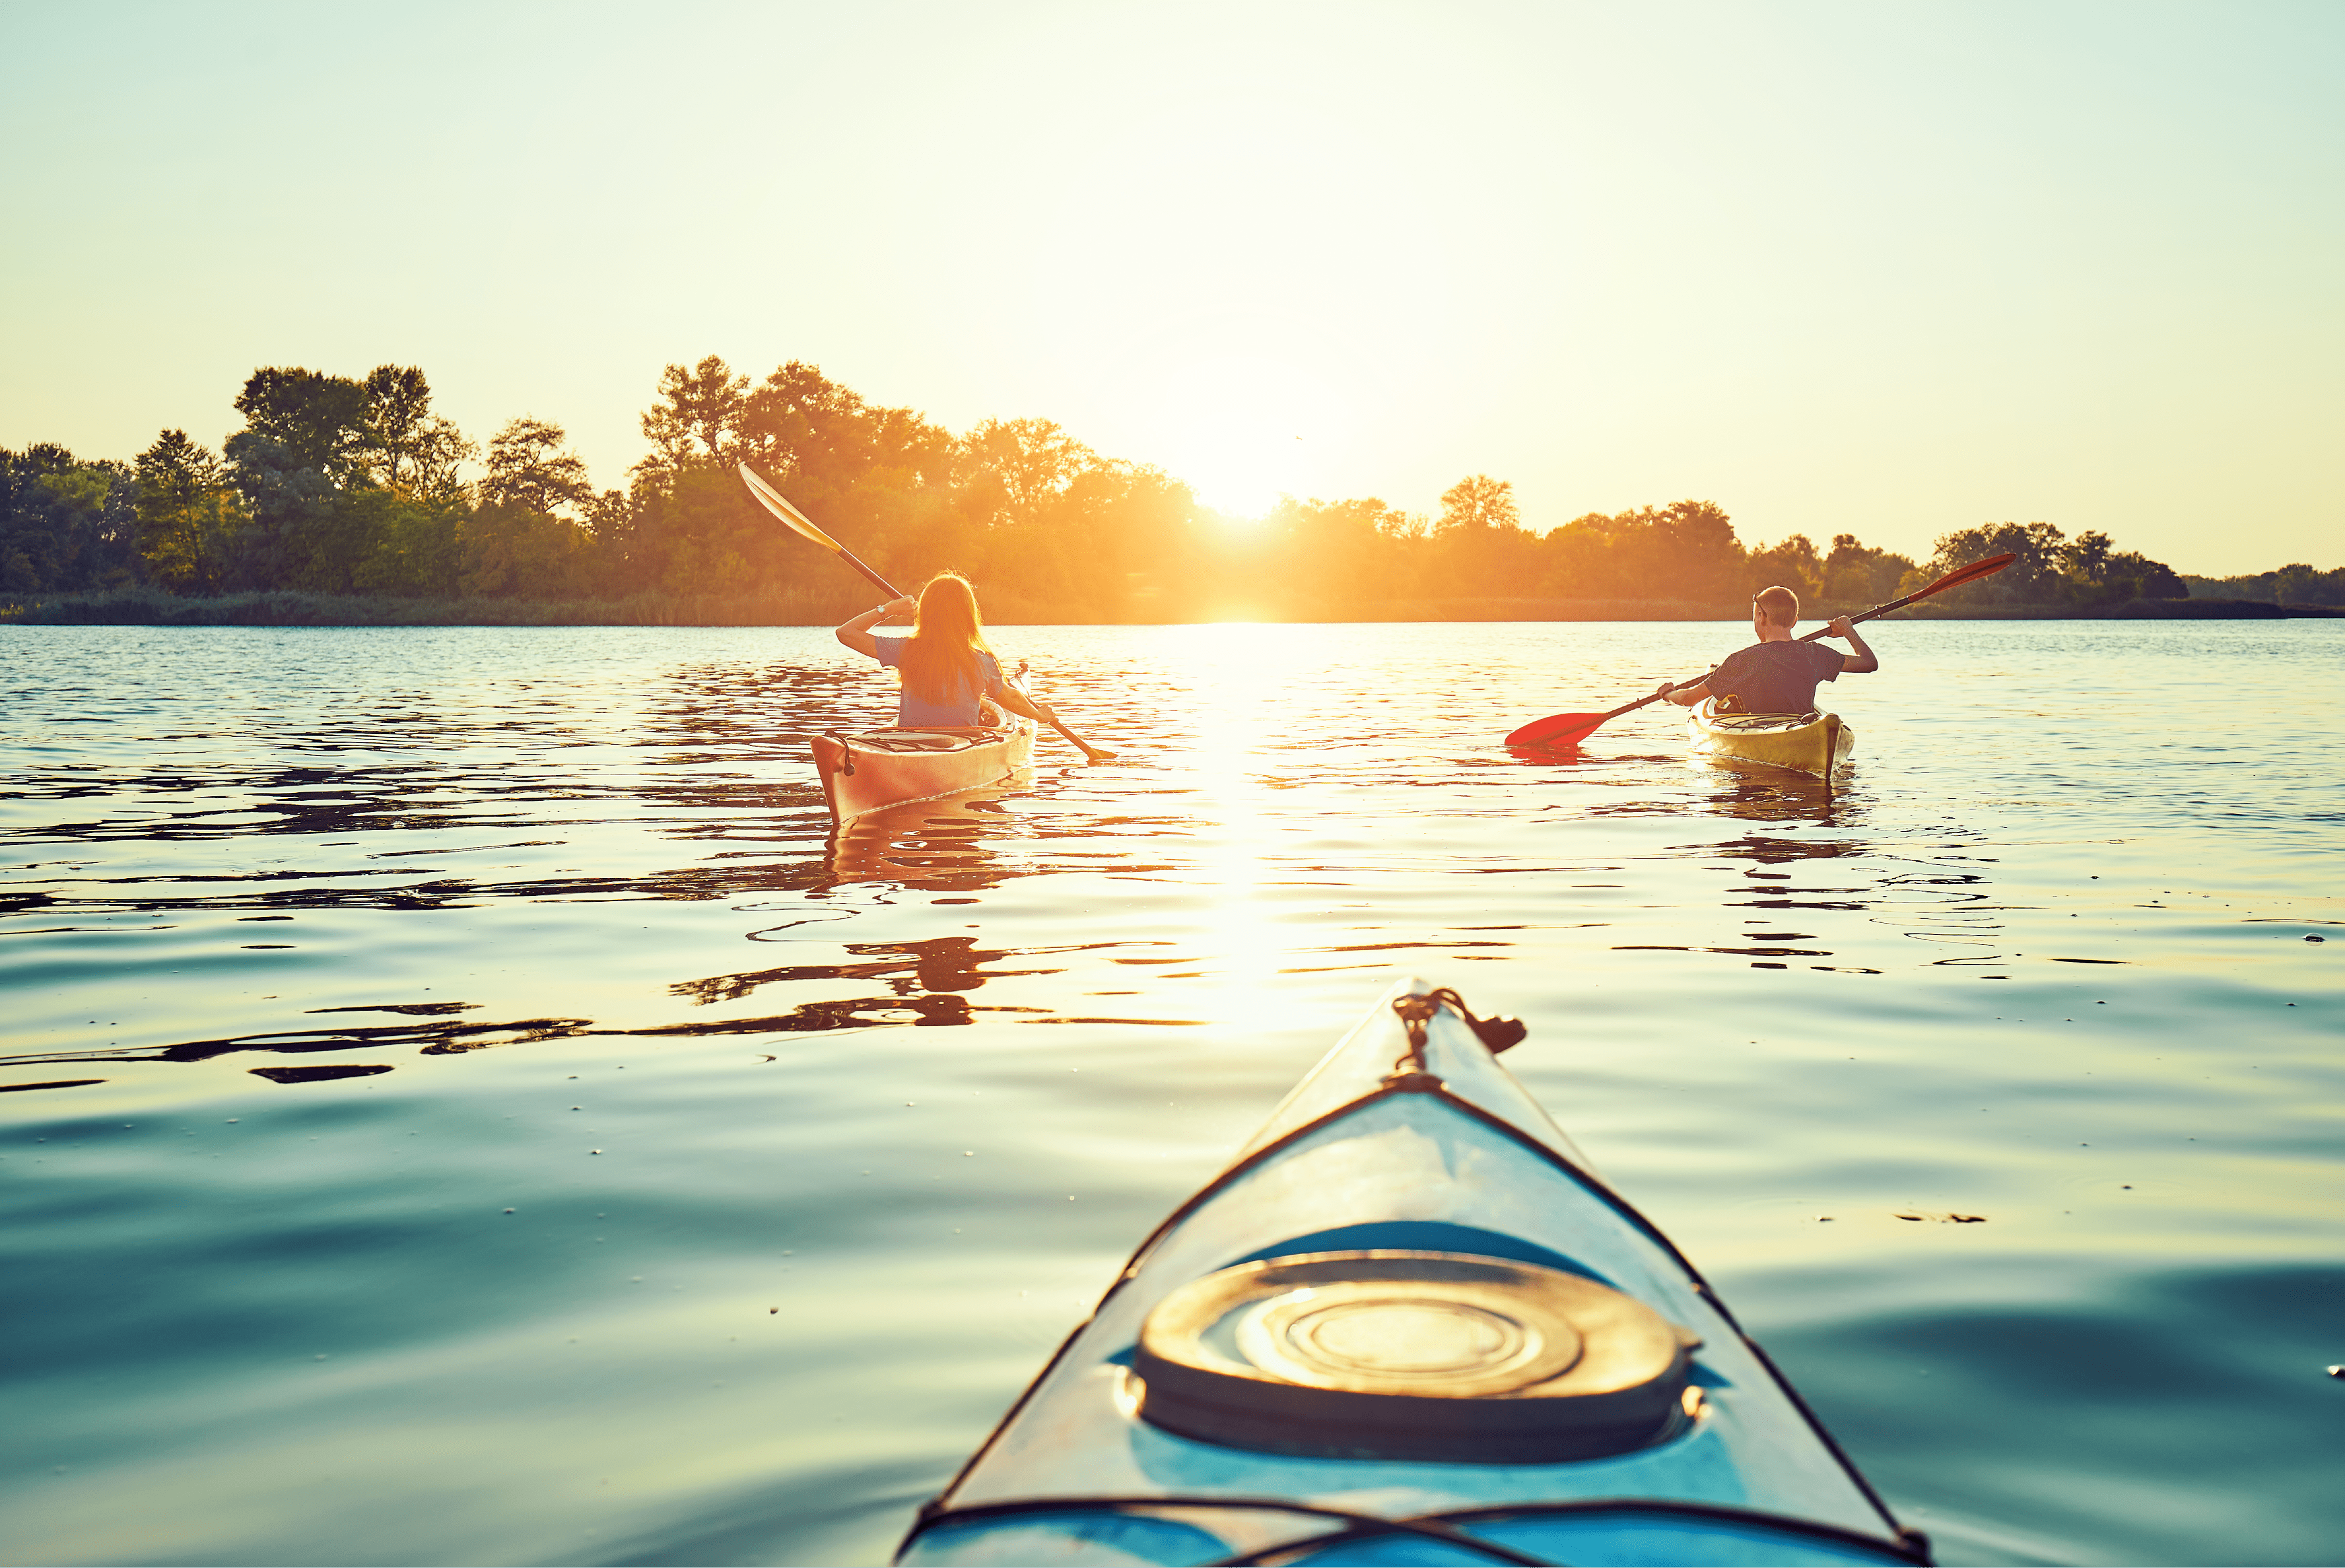 Canoe on the lake at sunset